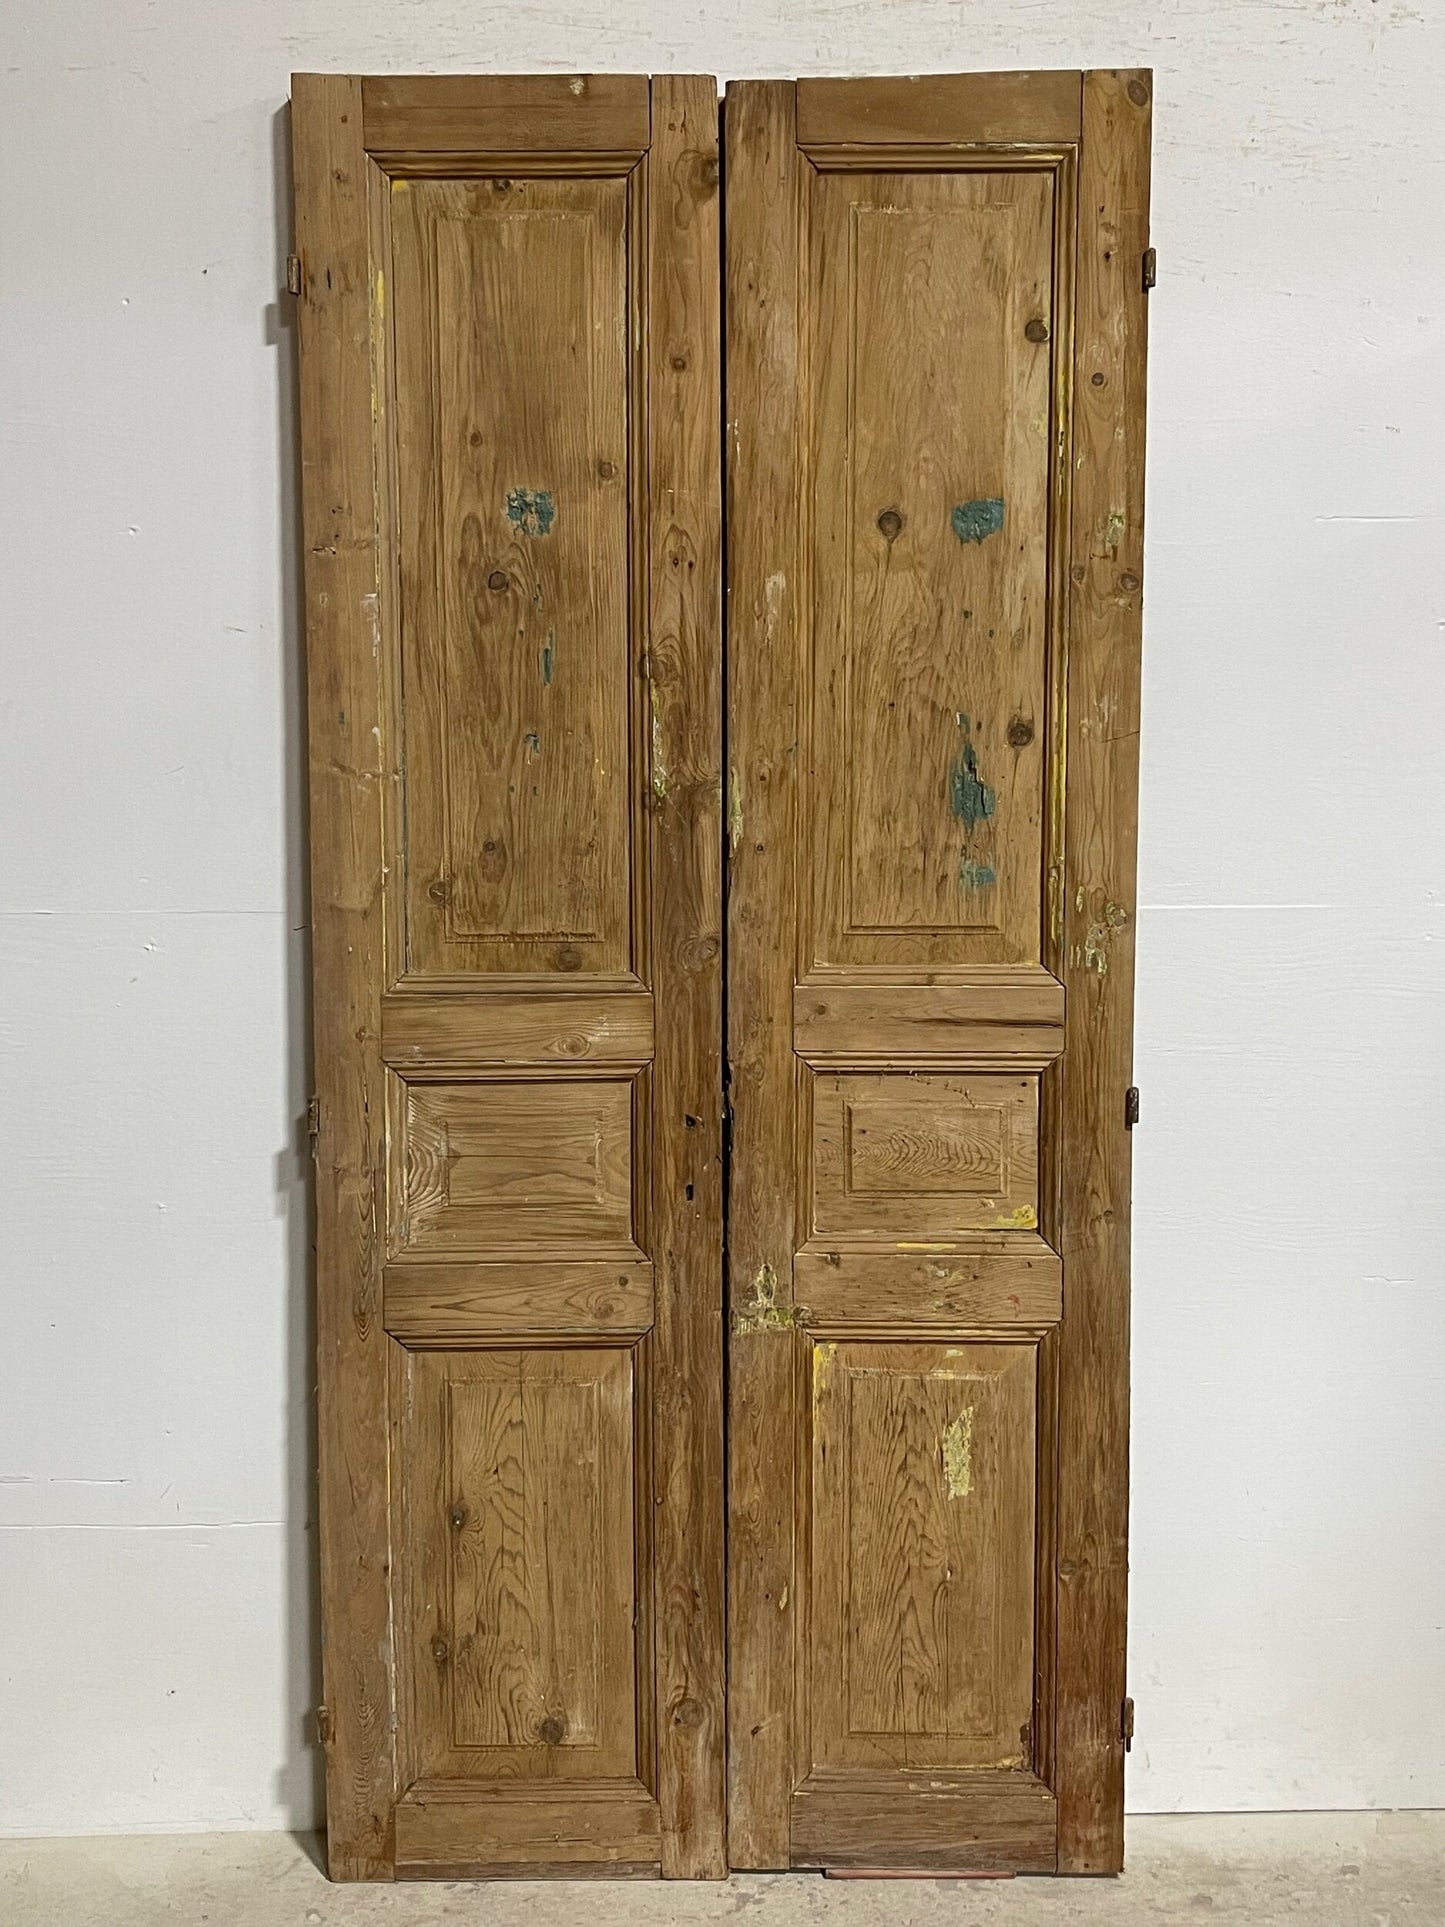 Antique french panel doors (87 x 39.75) I081